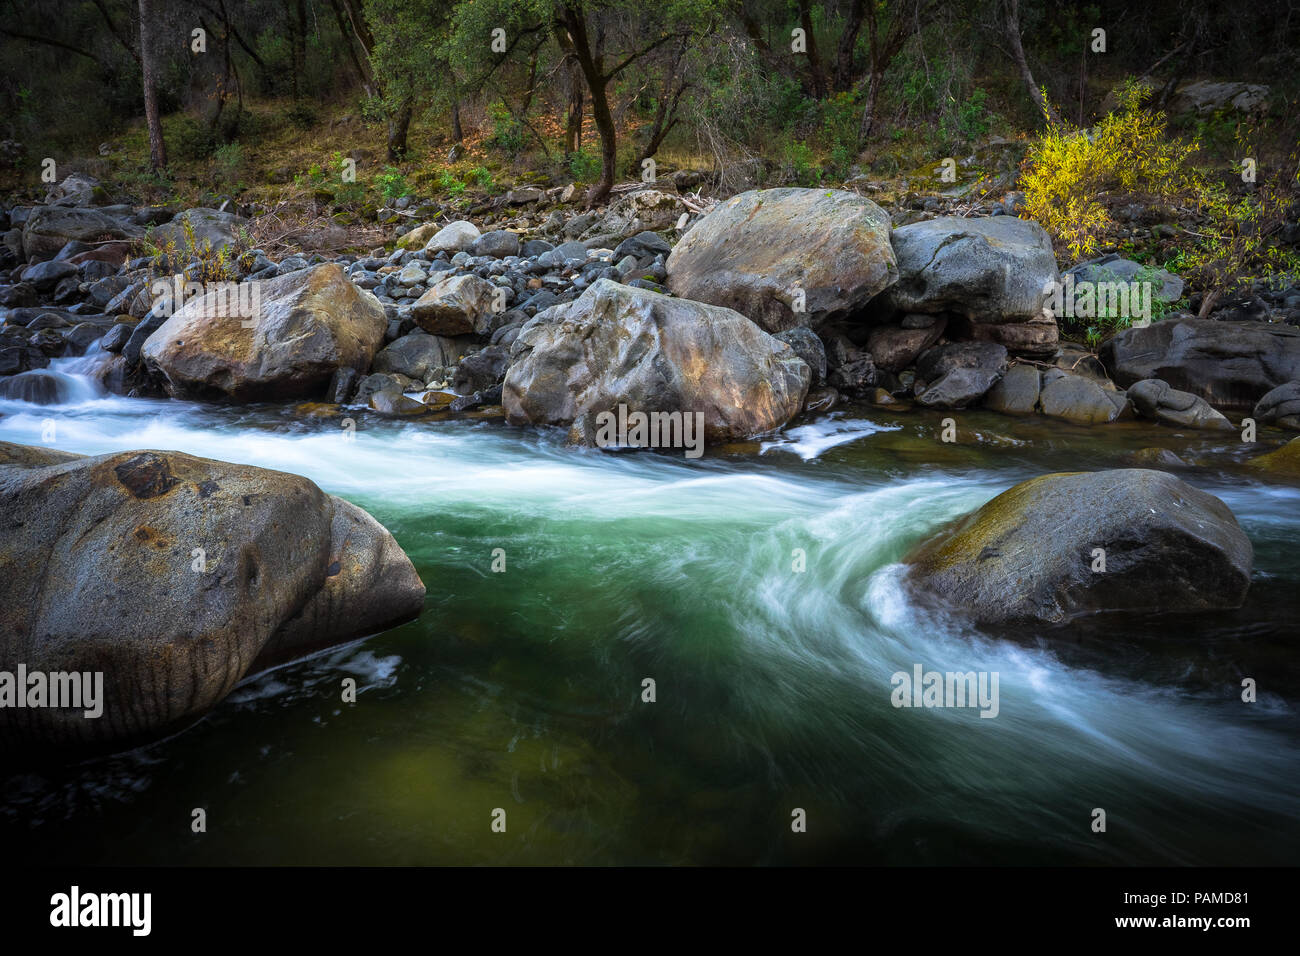 Beautiful green pool with swirling rapids - Tuolumne River in Groveland, California Stock Photo